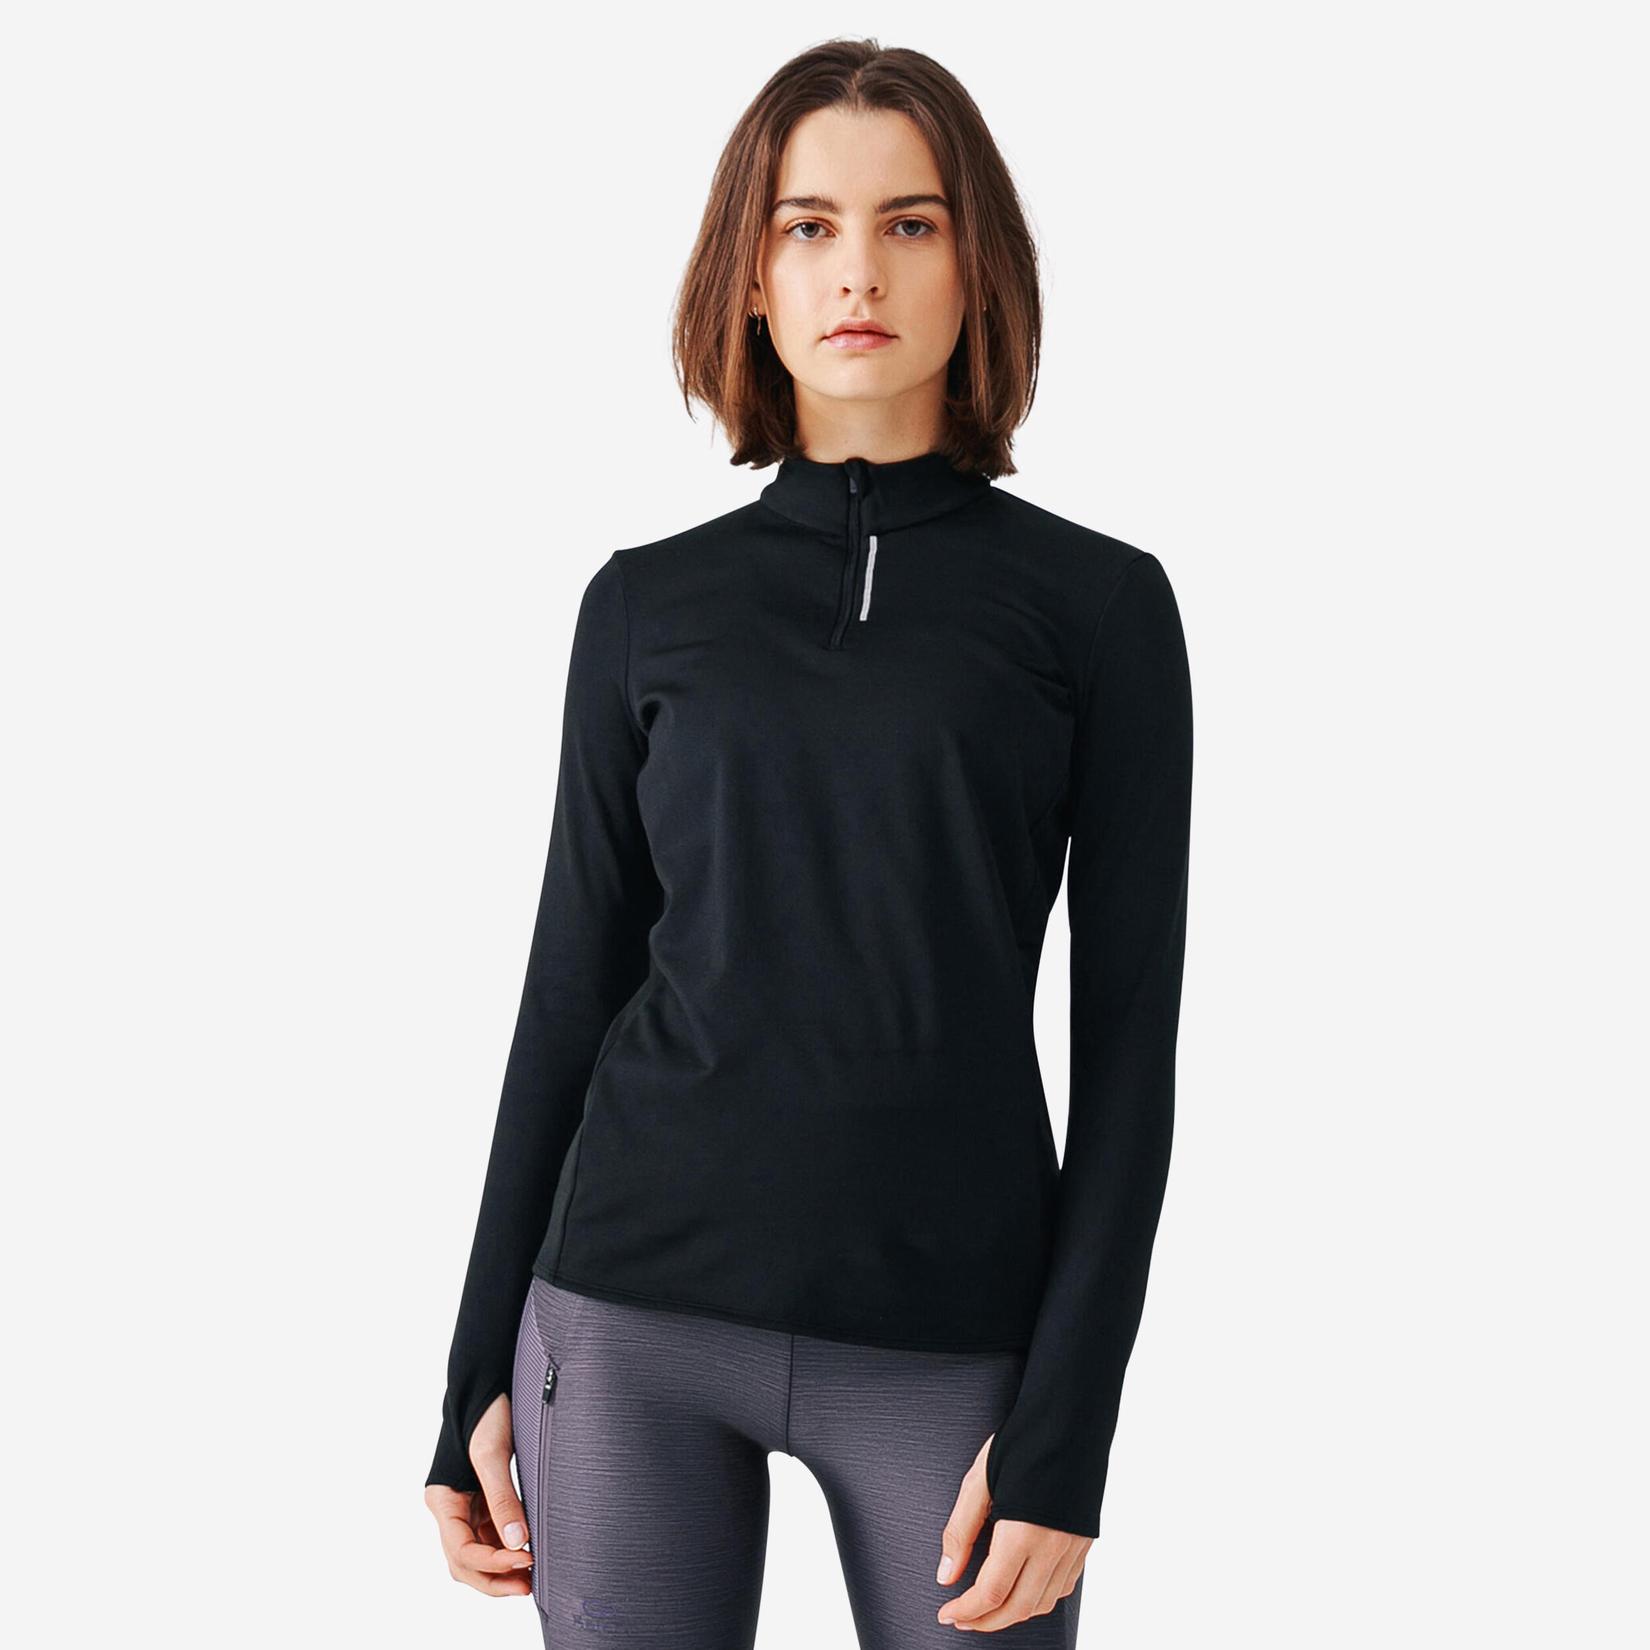 Zip Warm women's long-sleeved running T-shirt - black offers at R 349 in Decathlon